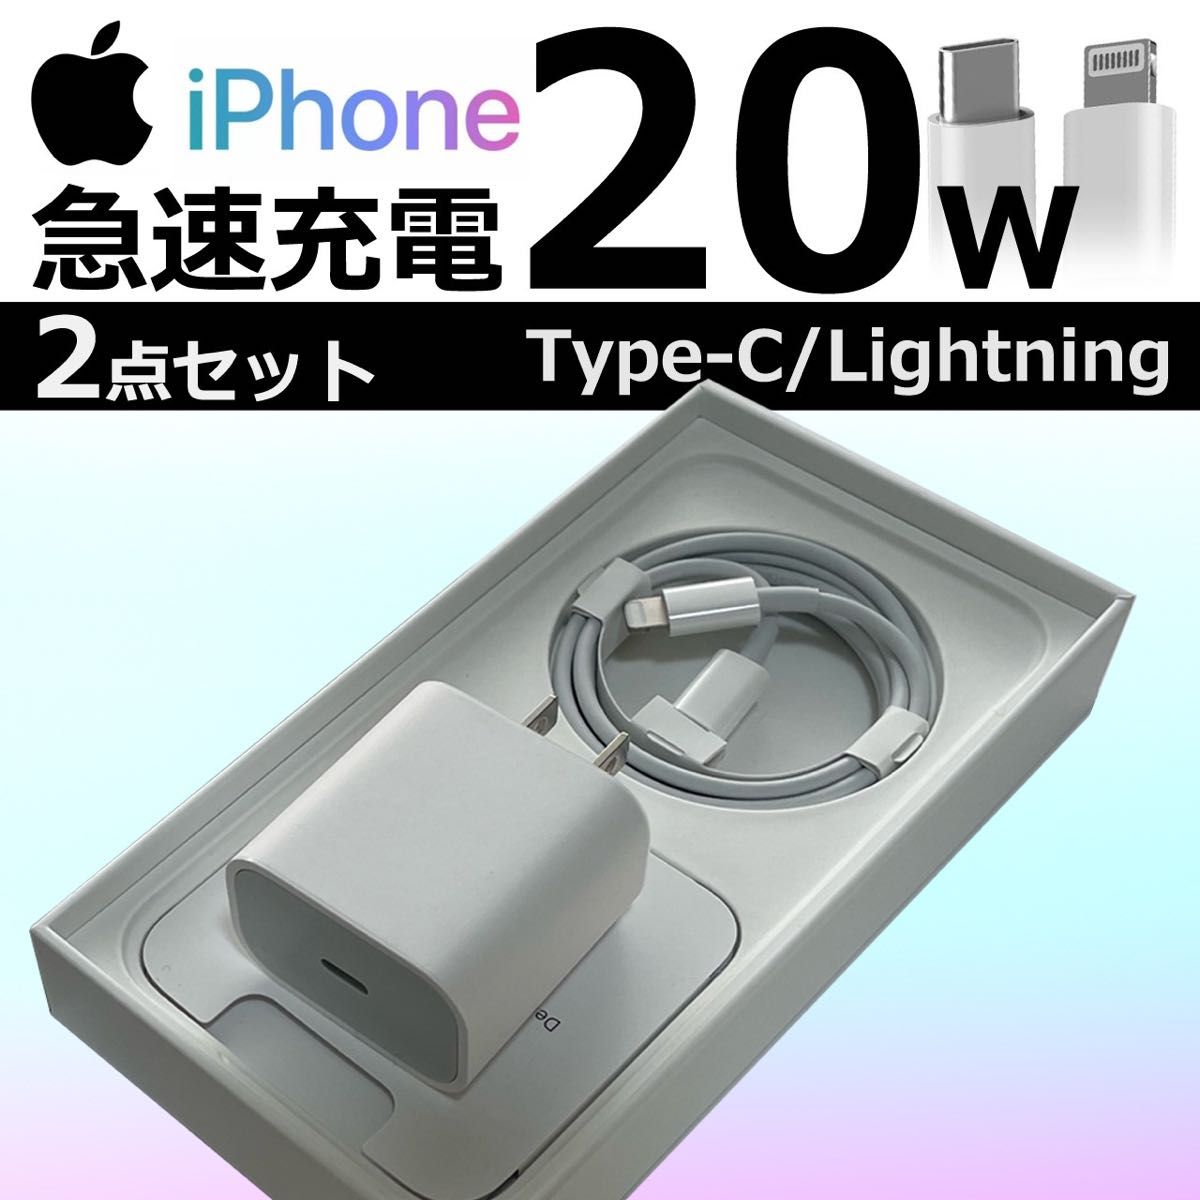 iPhone Type-C 20W lightning cable  ライトニングケーブル 急速充電 高速充電 データ転送